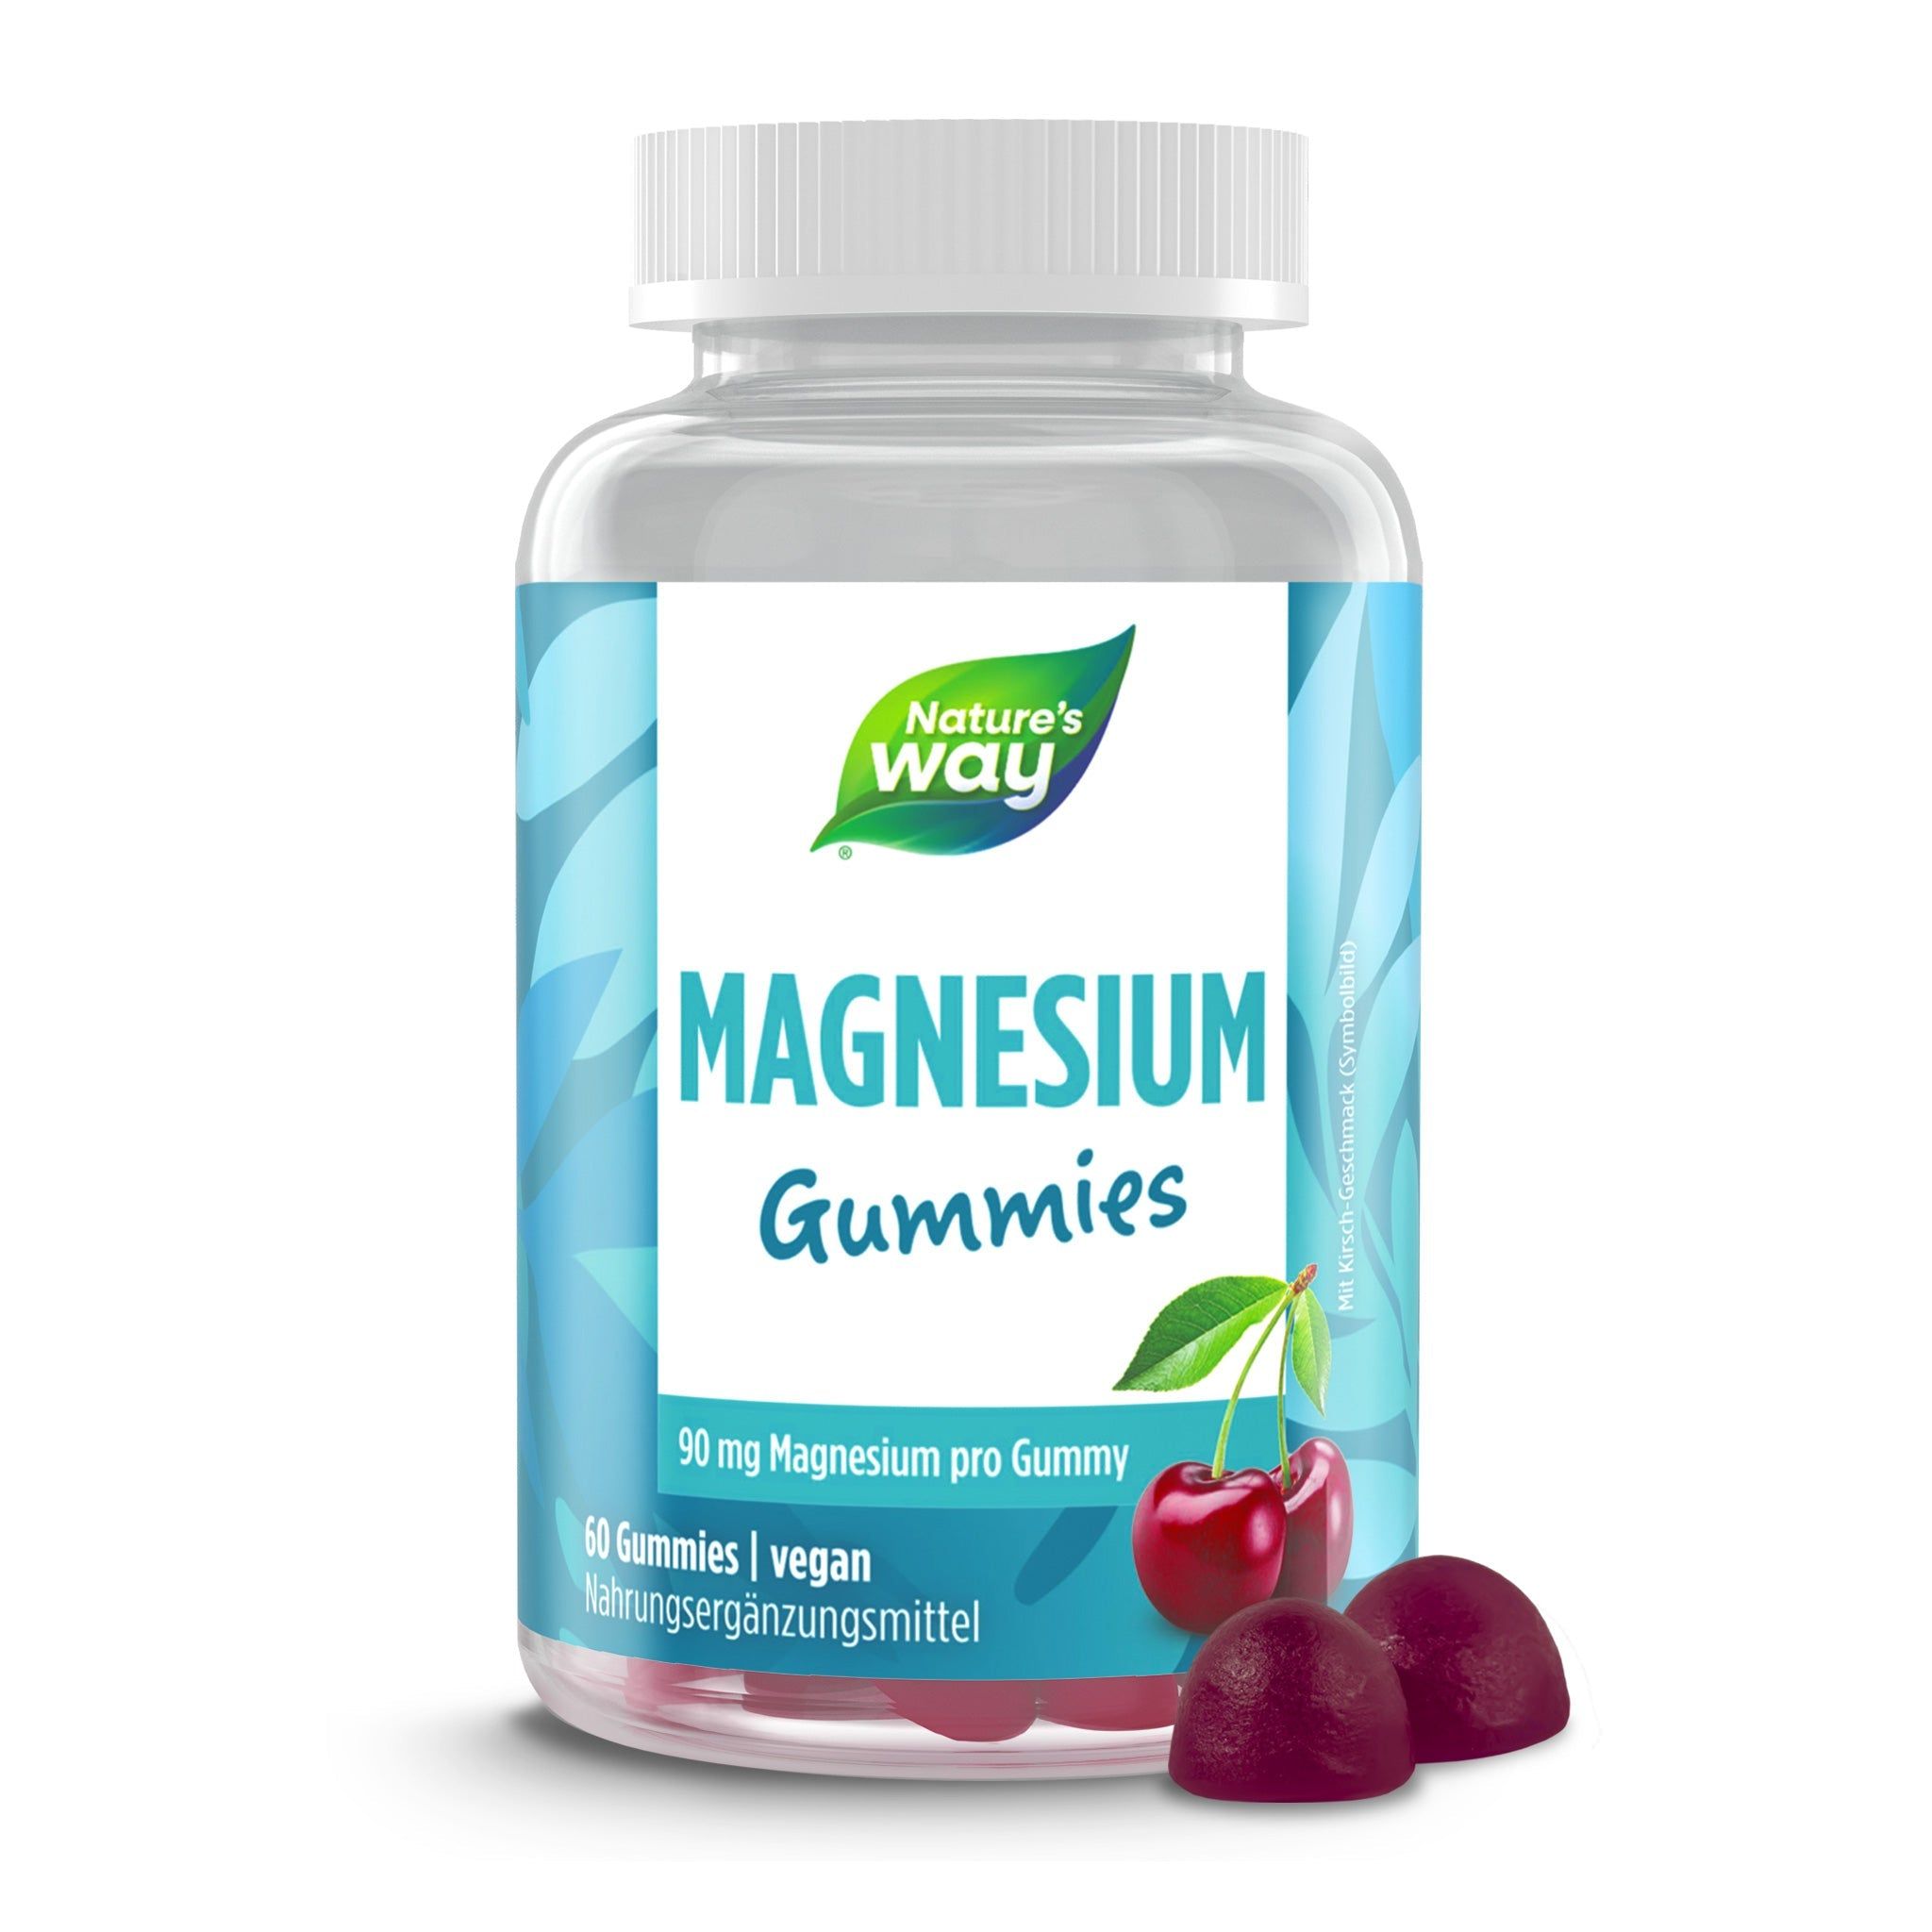 Nature's Way Magnesium Gummies